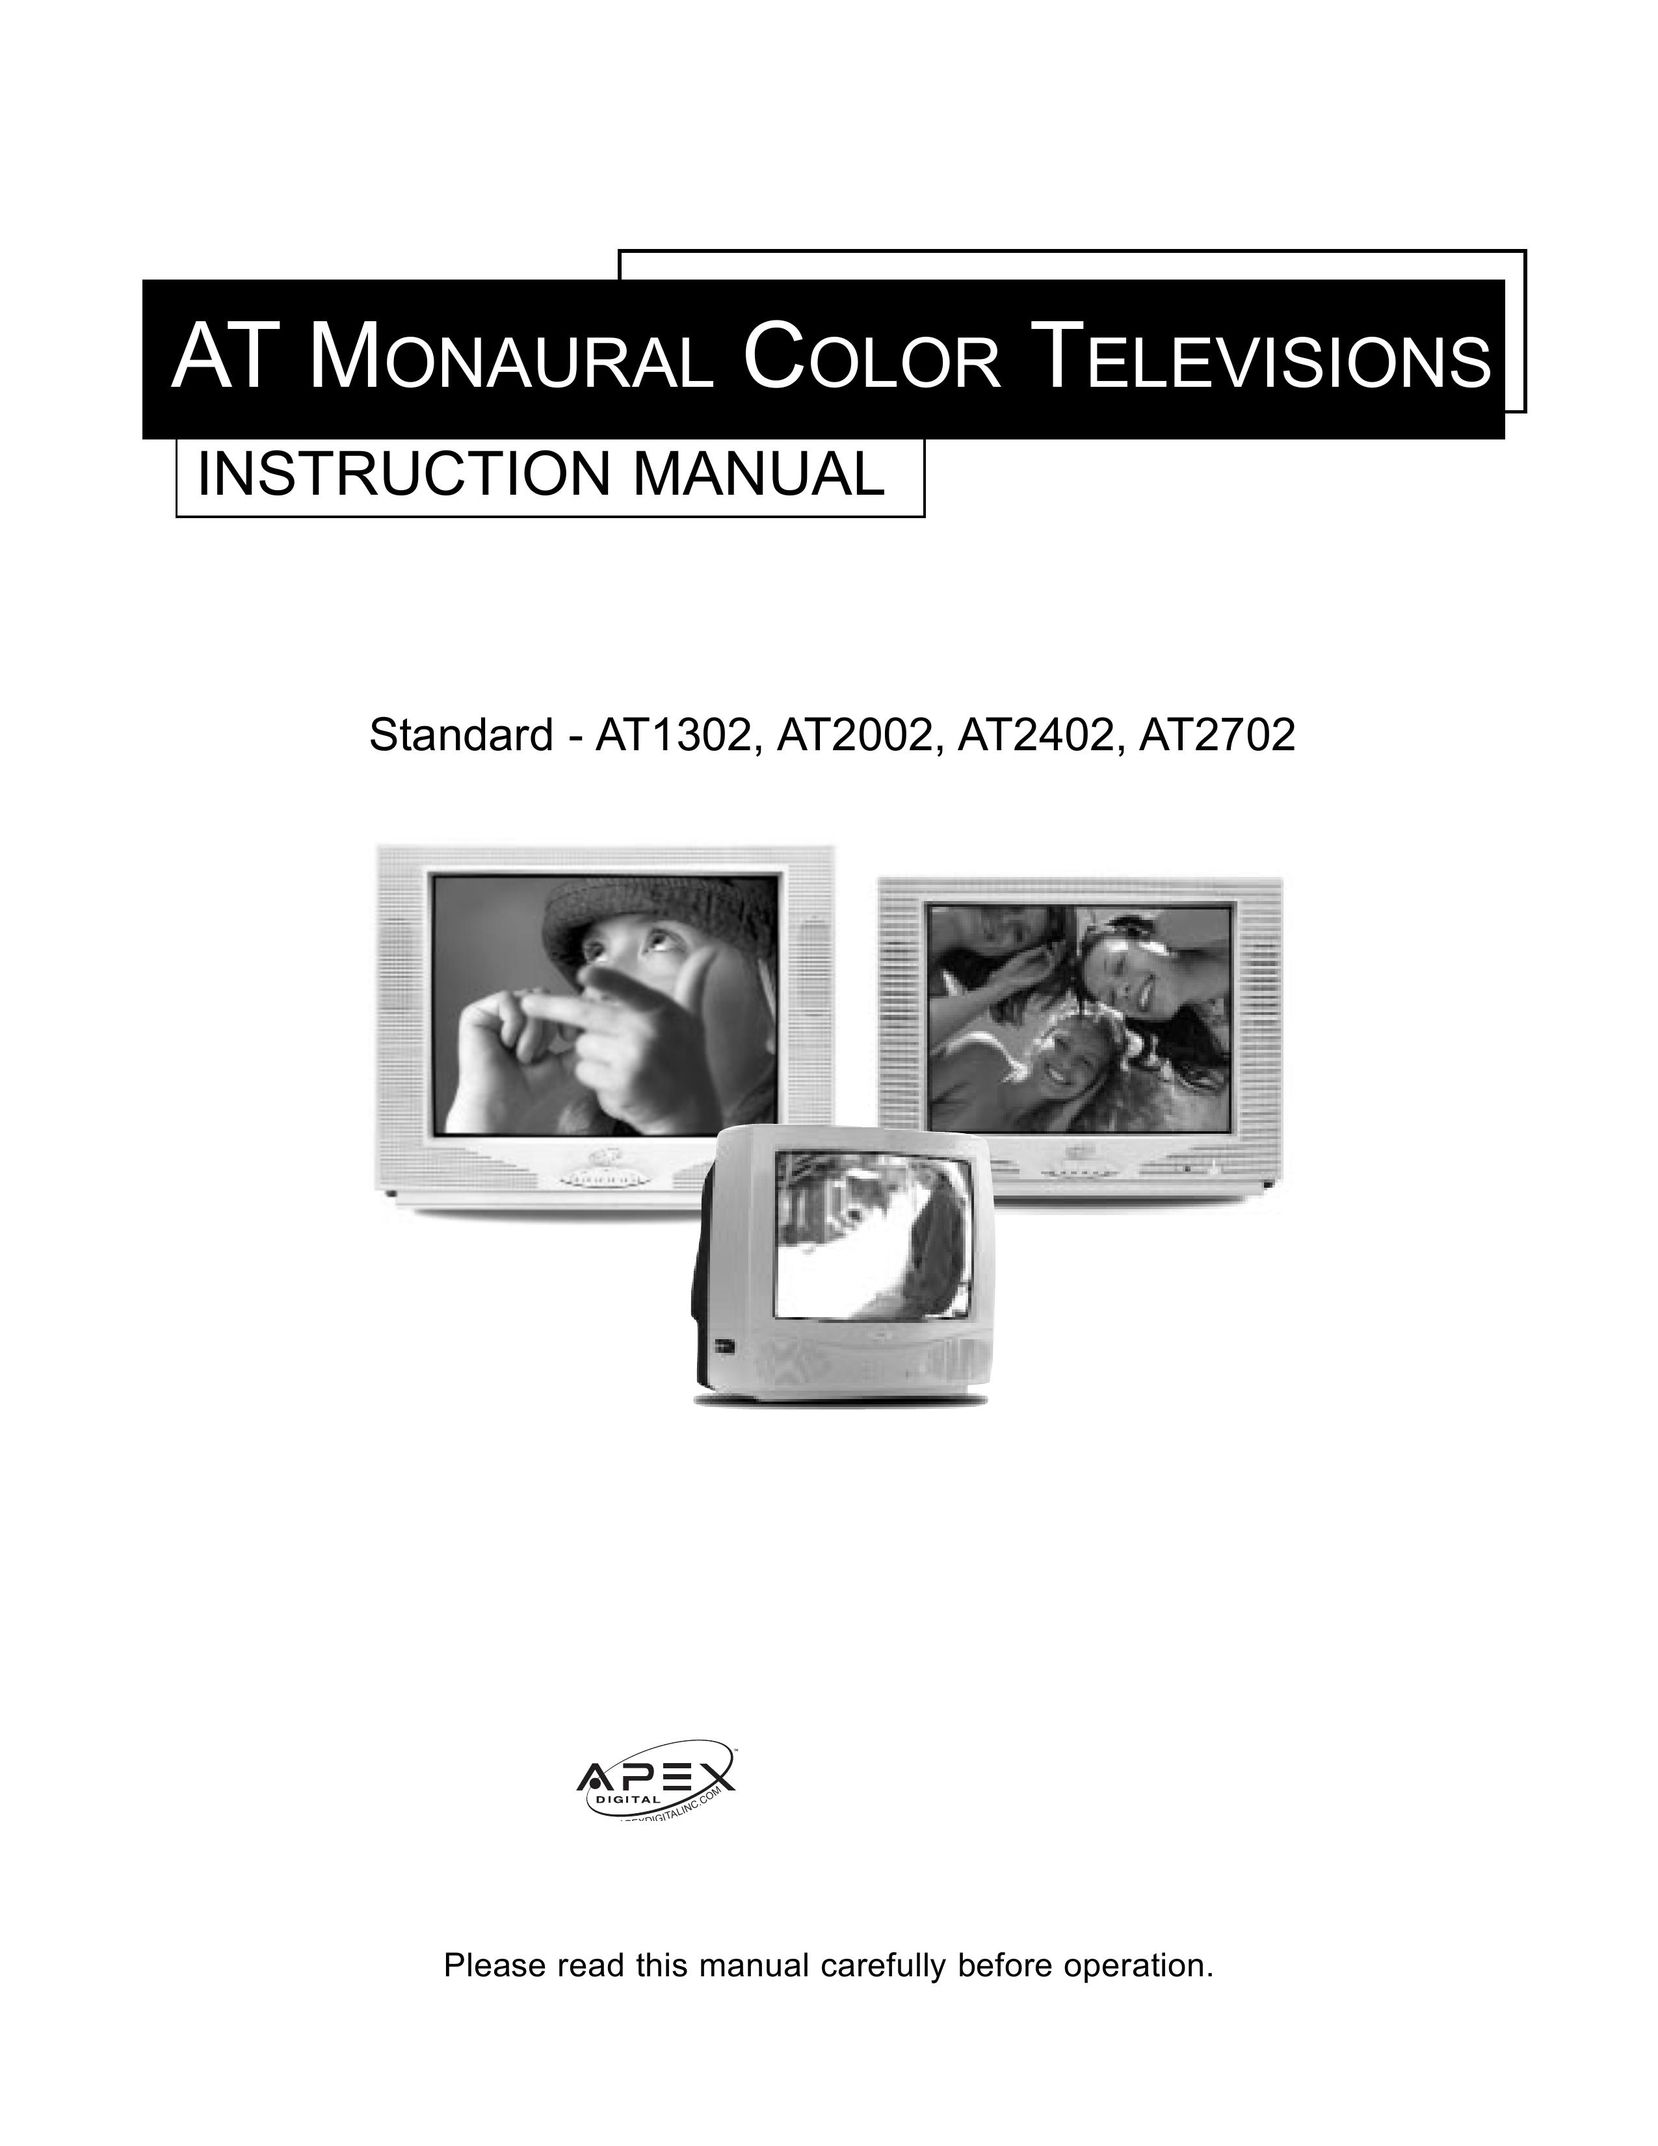 Apex Digital AT2702 Flat Panel Television User Manual